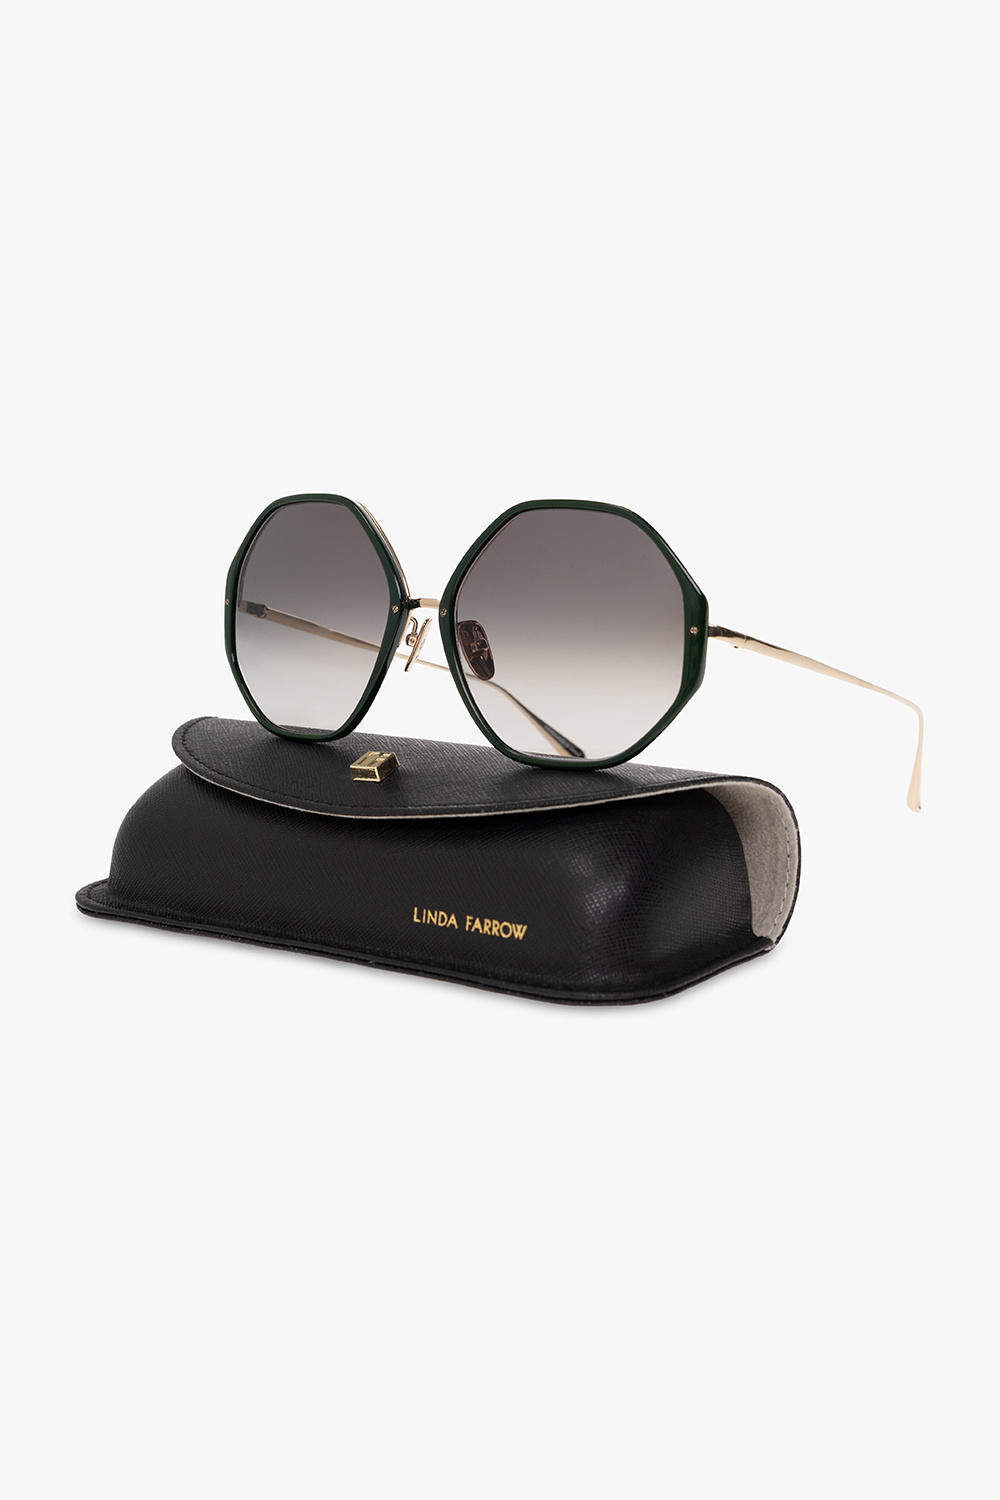 Linda Farrow ‘Alona’ sunglasses